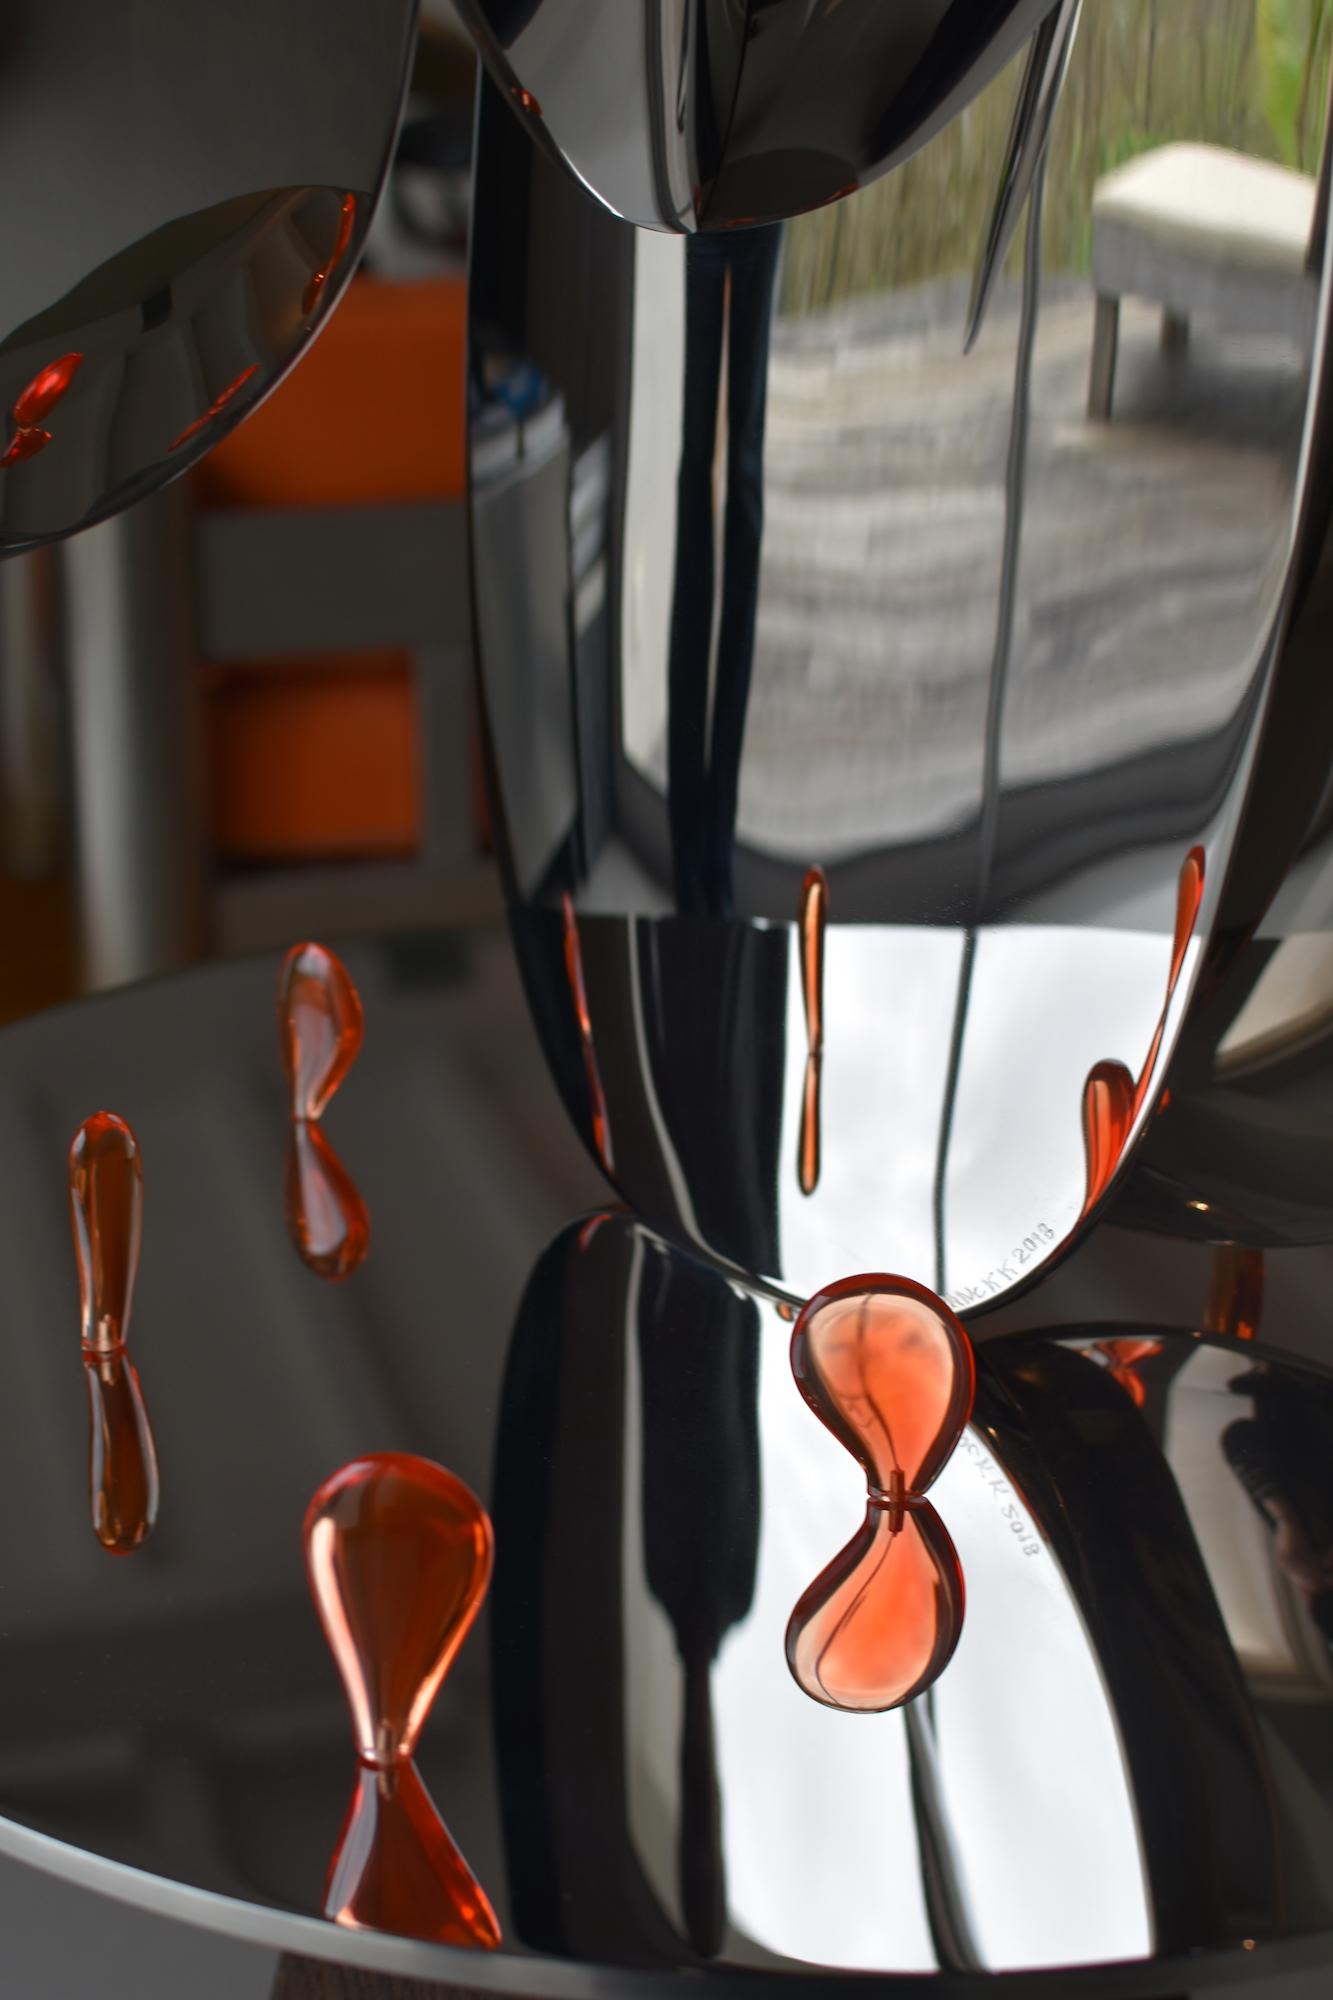 Kaktus by Franck K - Stainless steel sculpture, reflections, light, vision For Sale 12